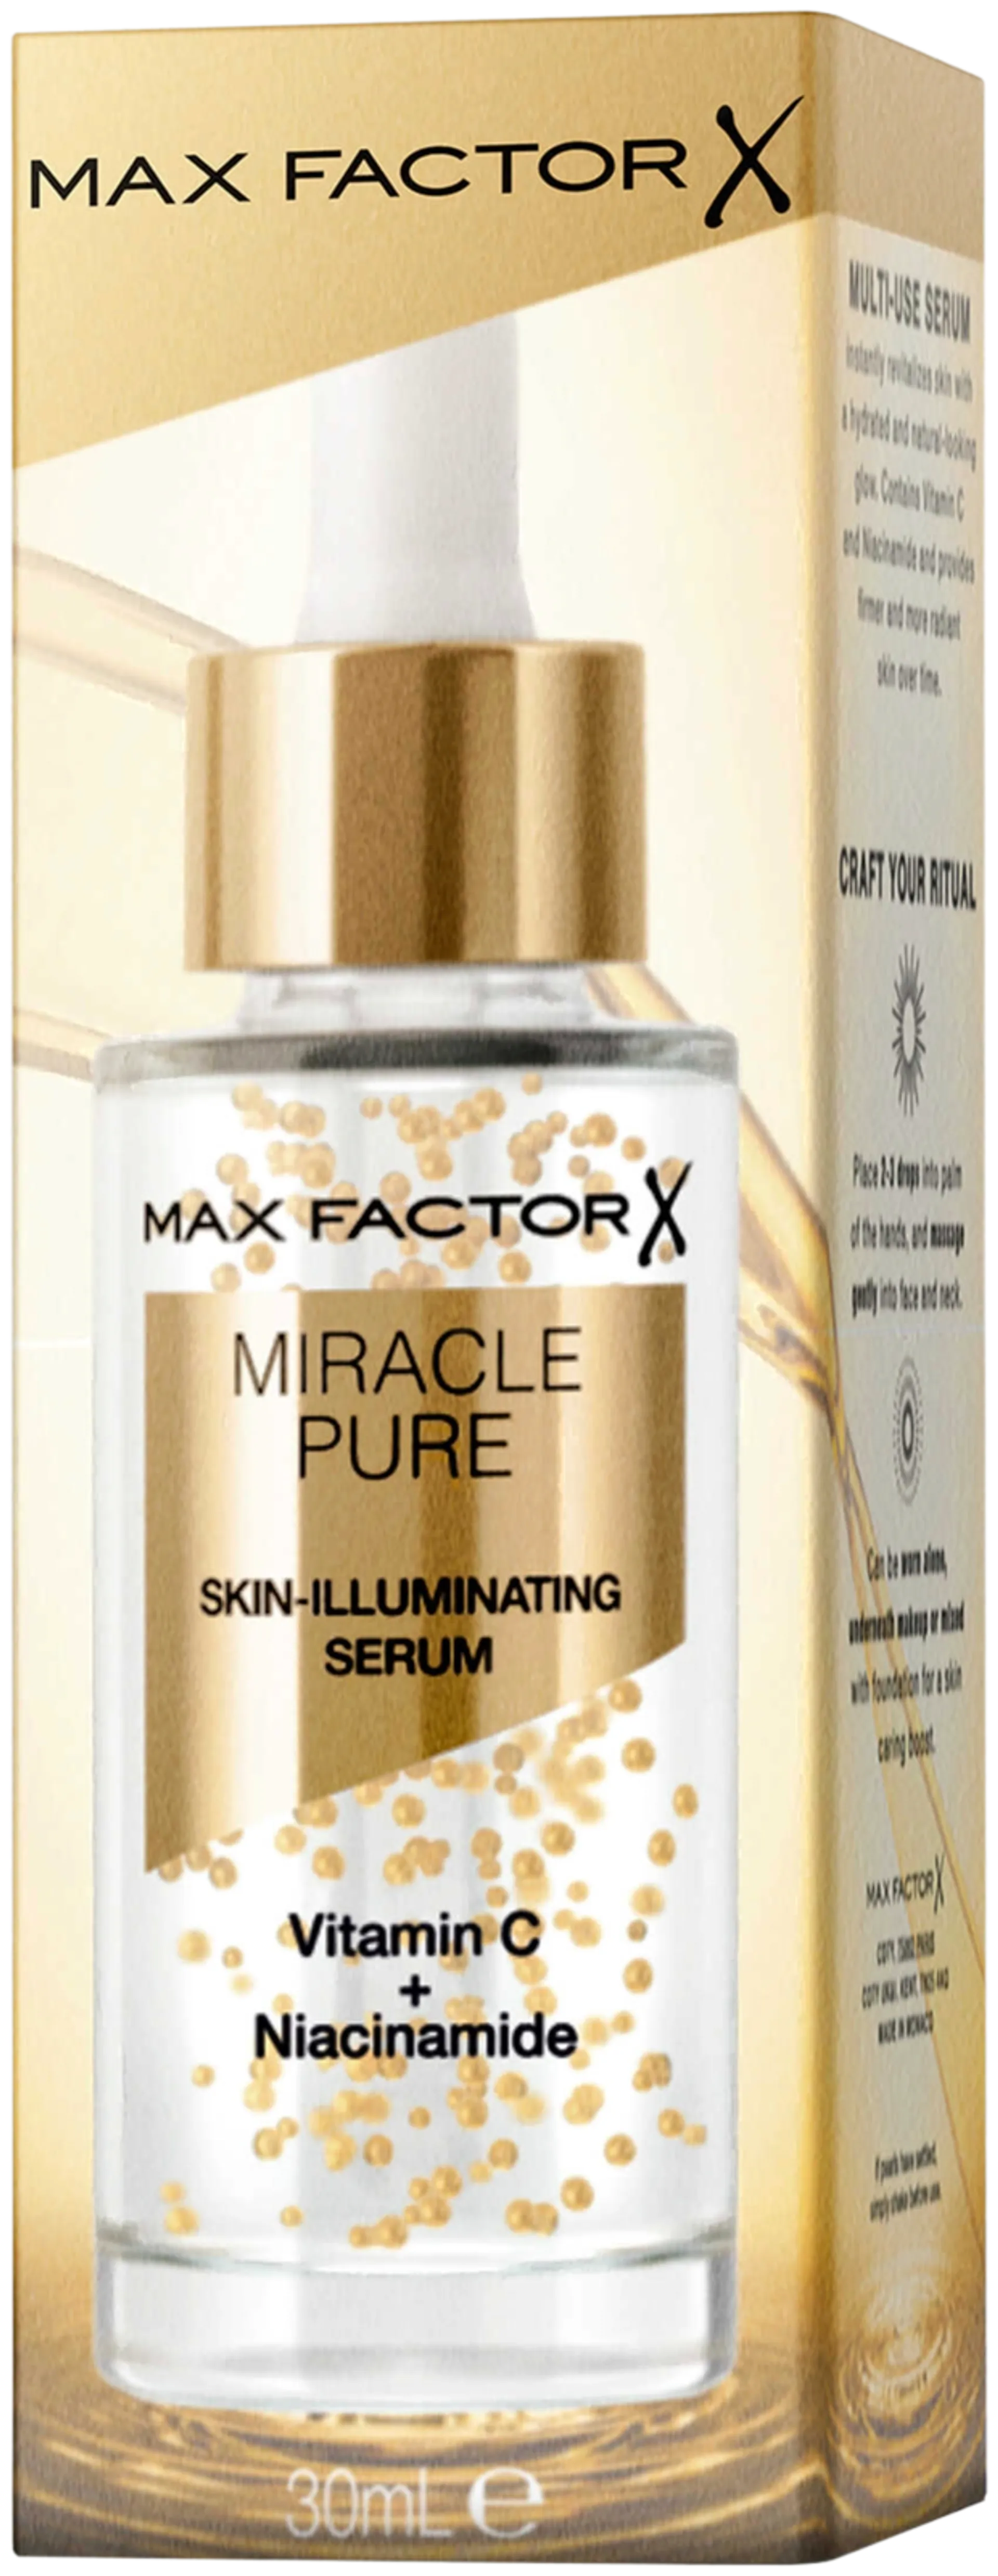 Max Factor Miracle Pure Serum 30 ml kasvoseerumi - 2